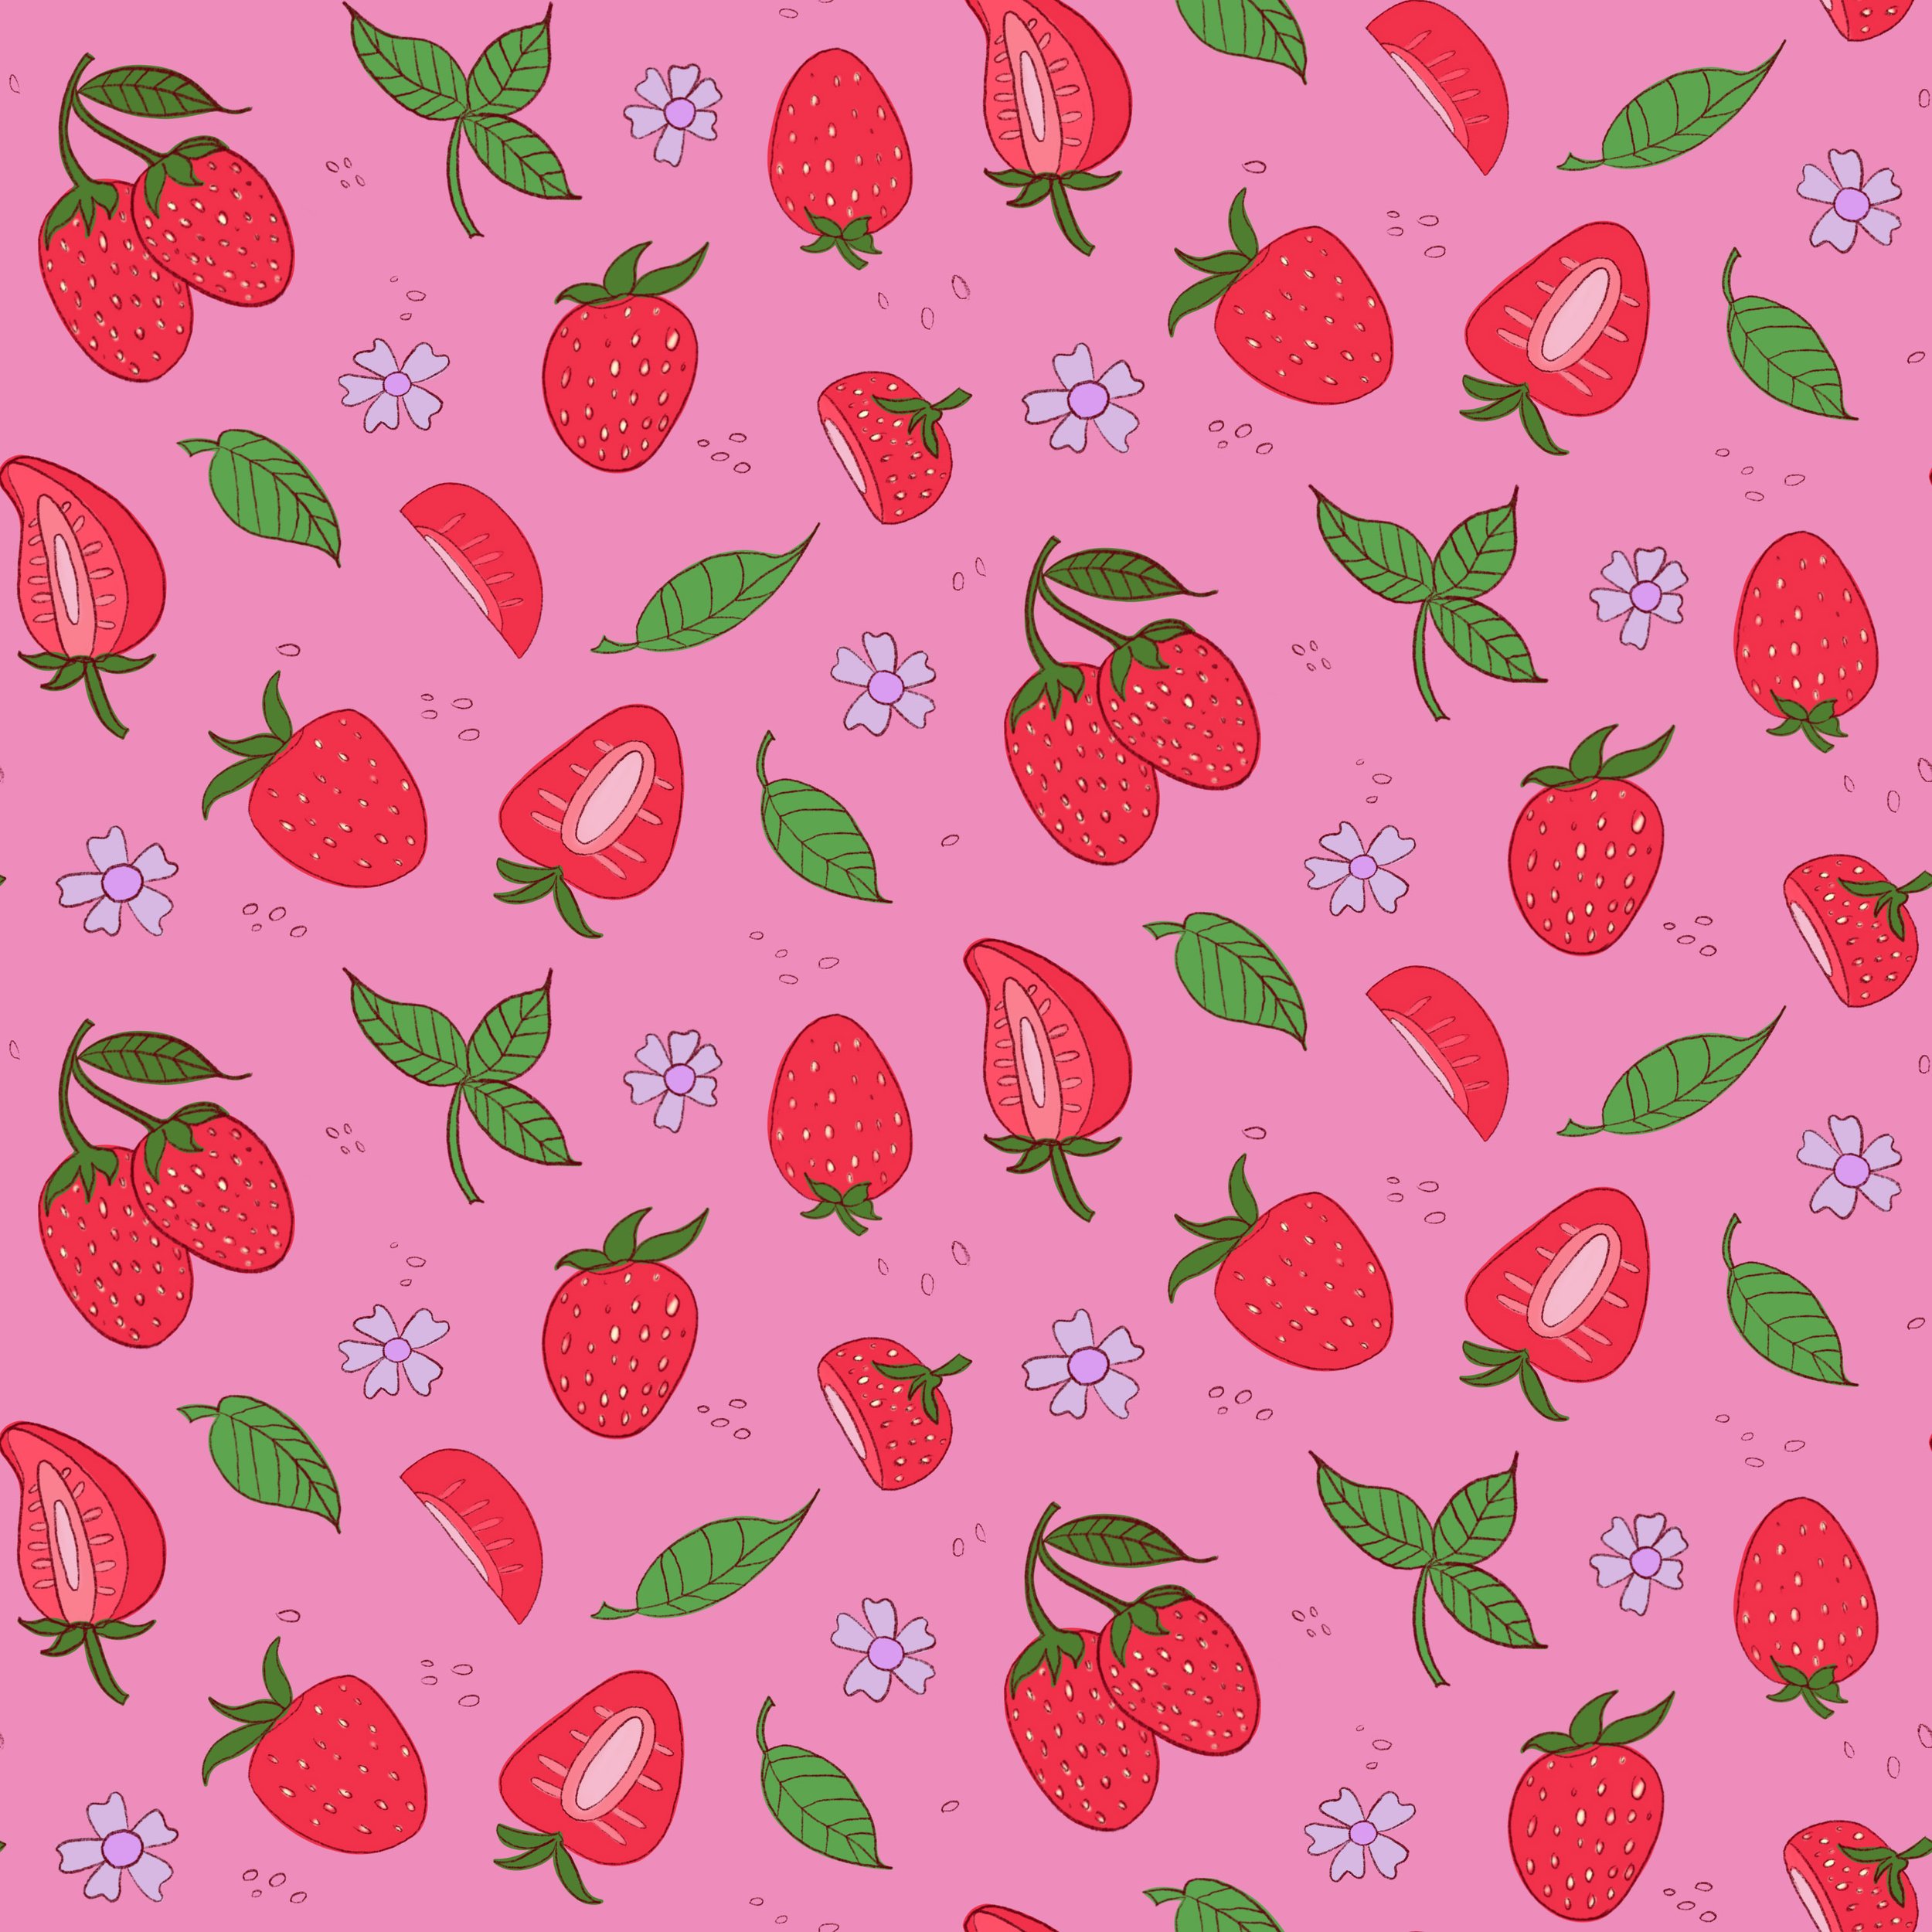 Strawberry_Margarita_Pattern square.jpg